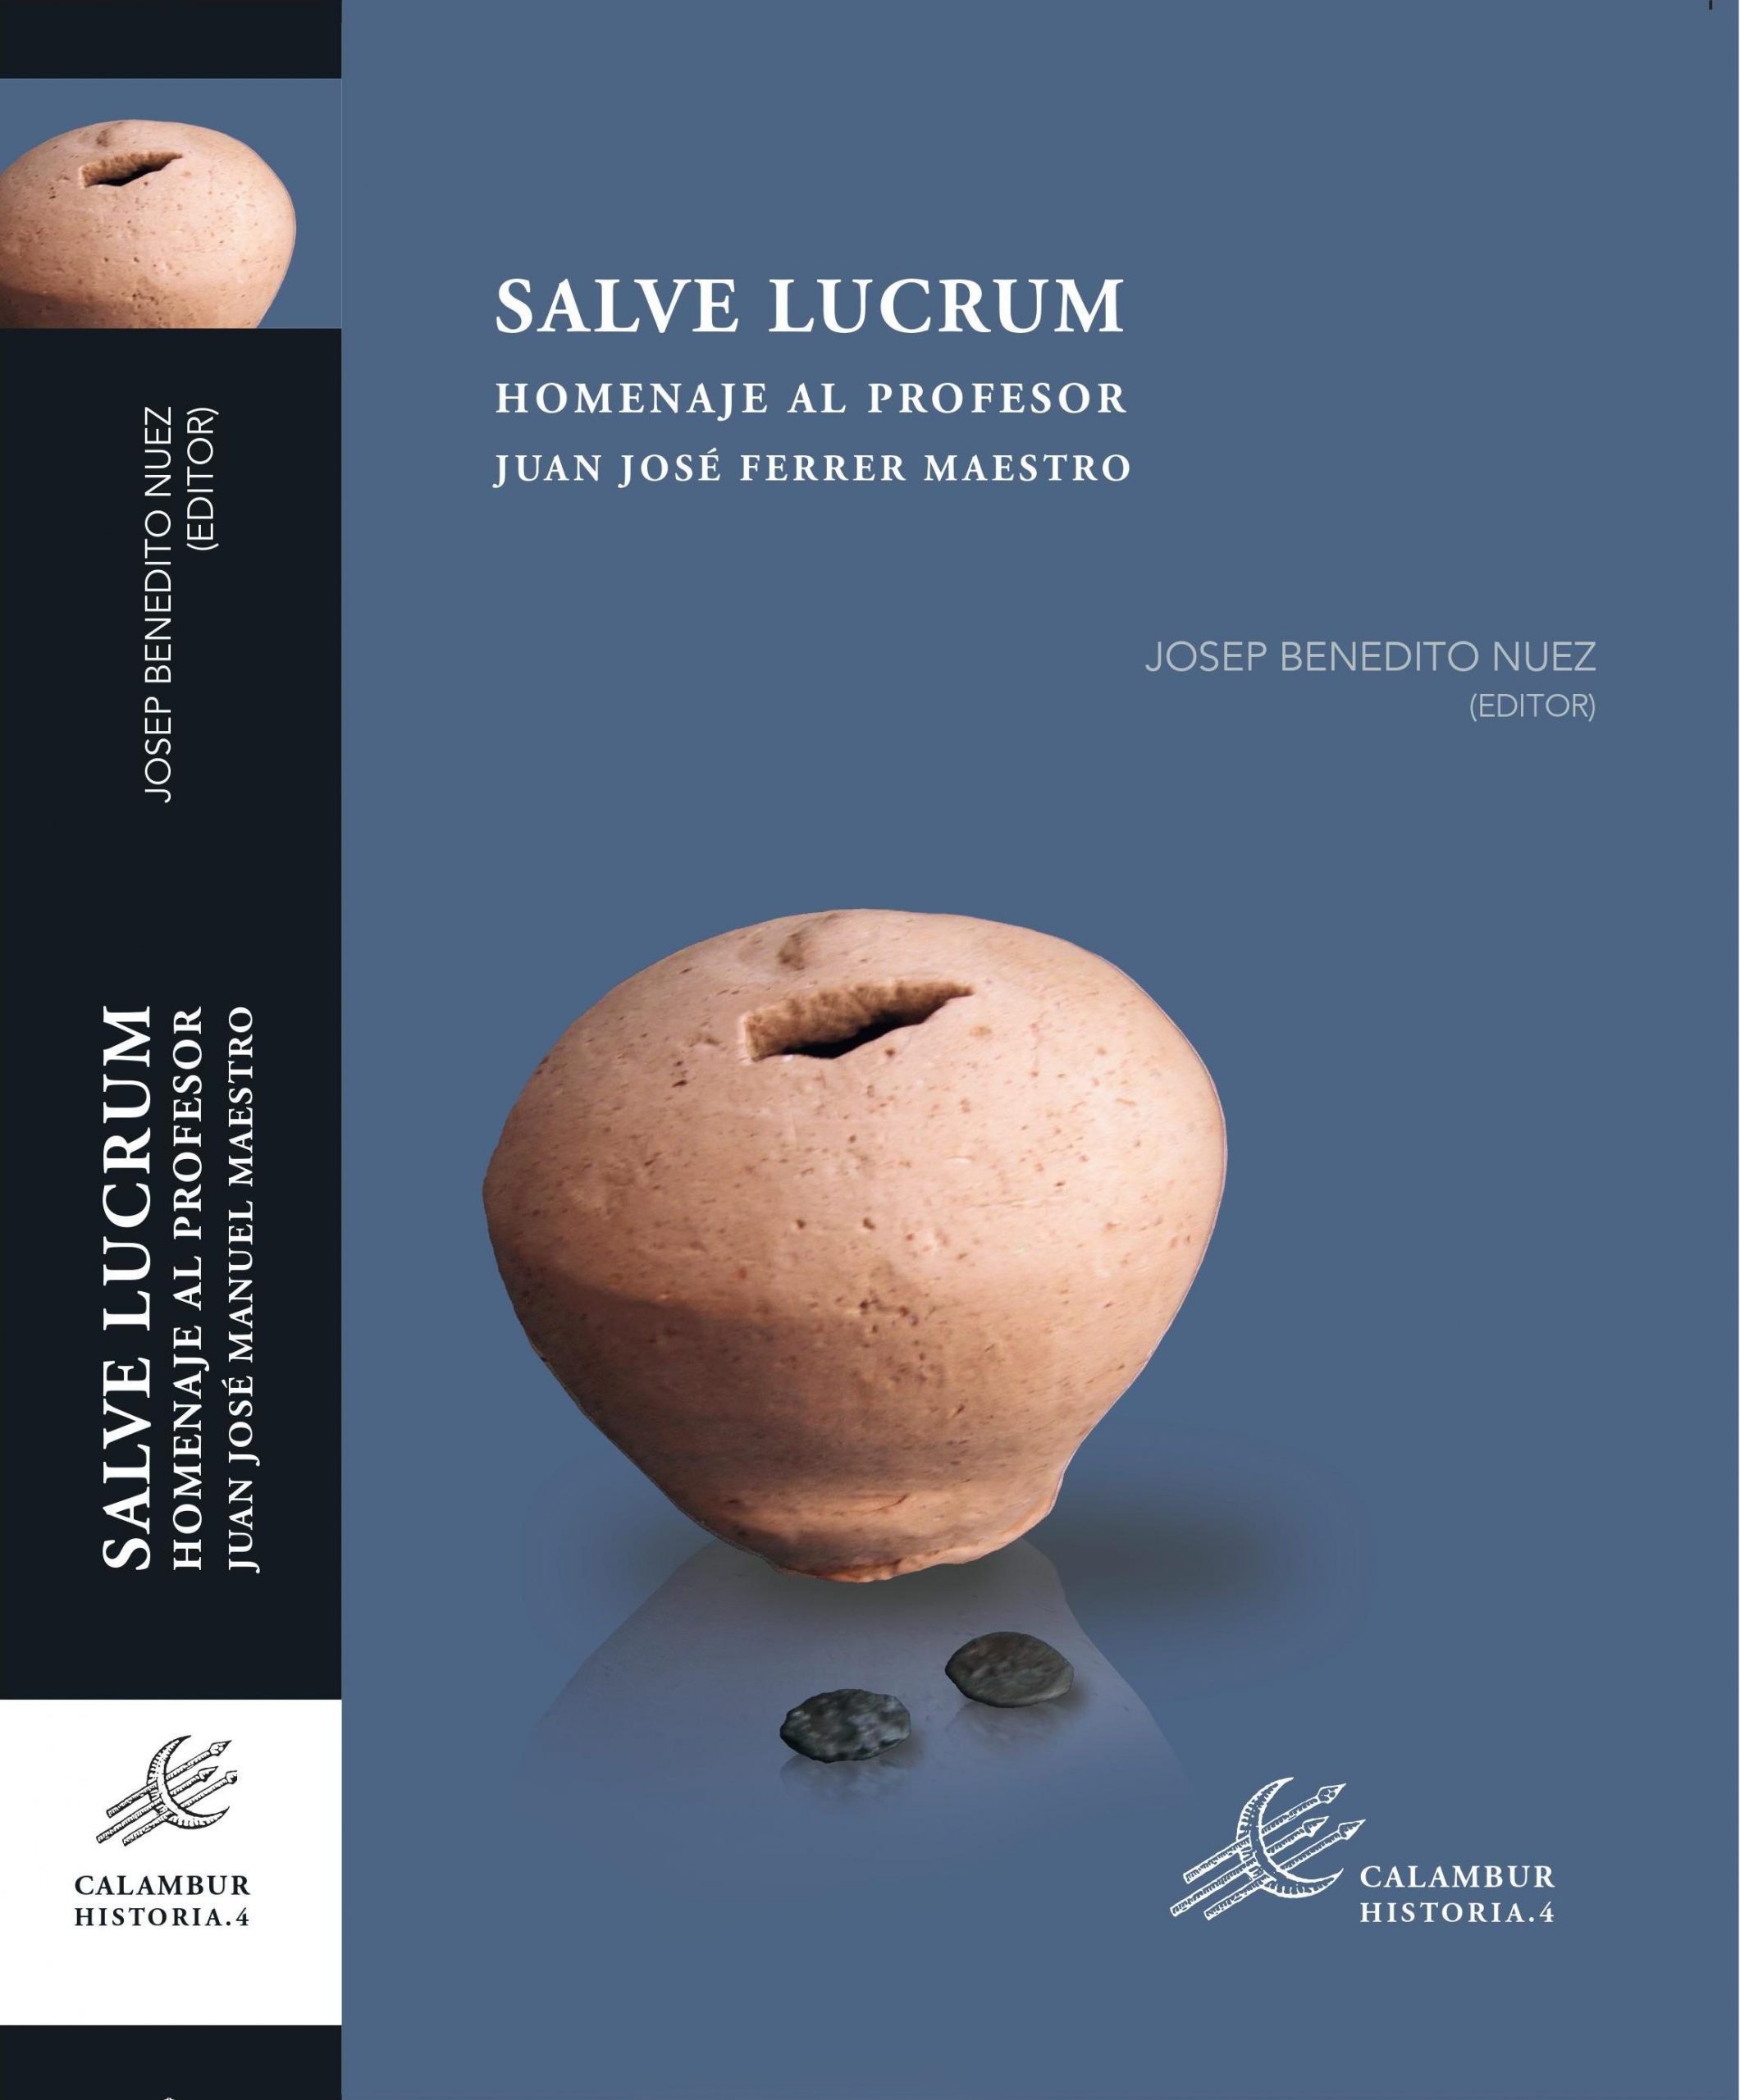 Título: Salve Lucrum. Homenaje al profesor Juan José Ferrer Maestro. Historia, 4 Editorial Calambur.